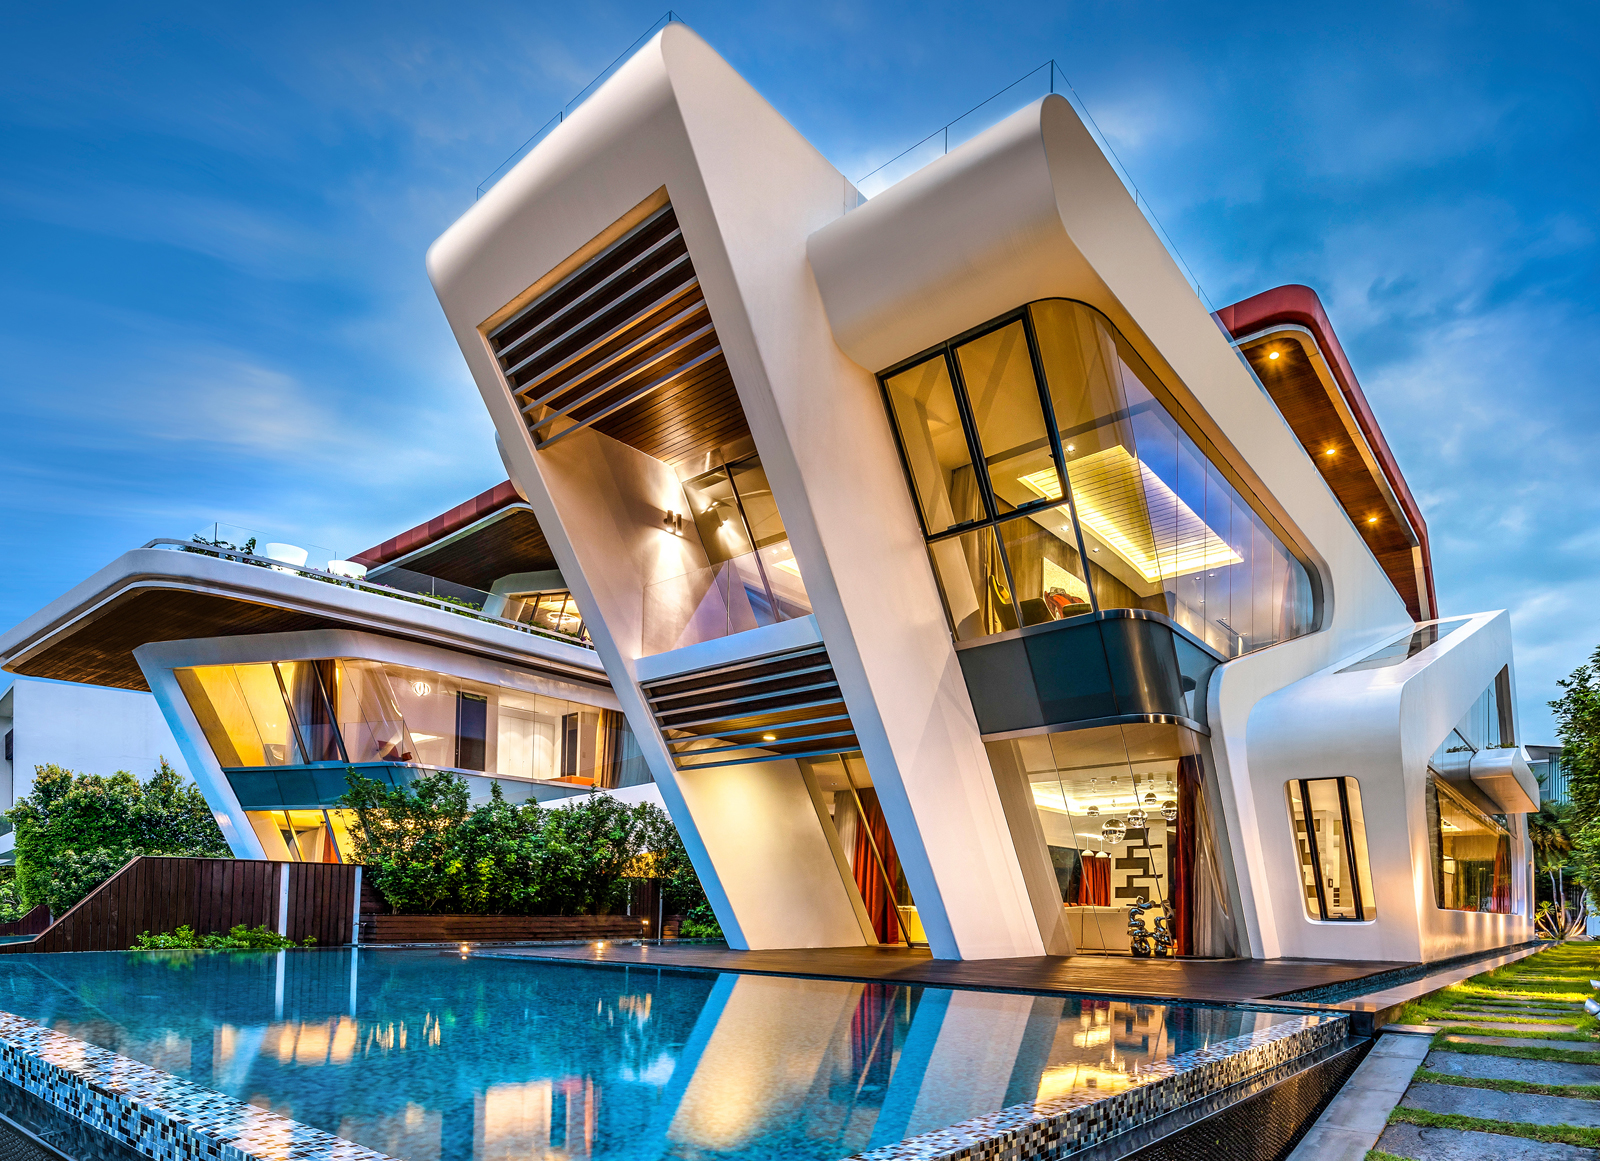 Villa Mistral by Mercurio Design Lab S.r.l. | International Residential Architecture Awards 2019